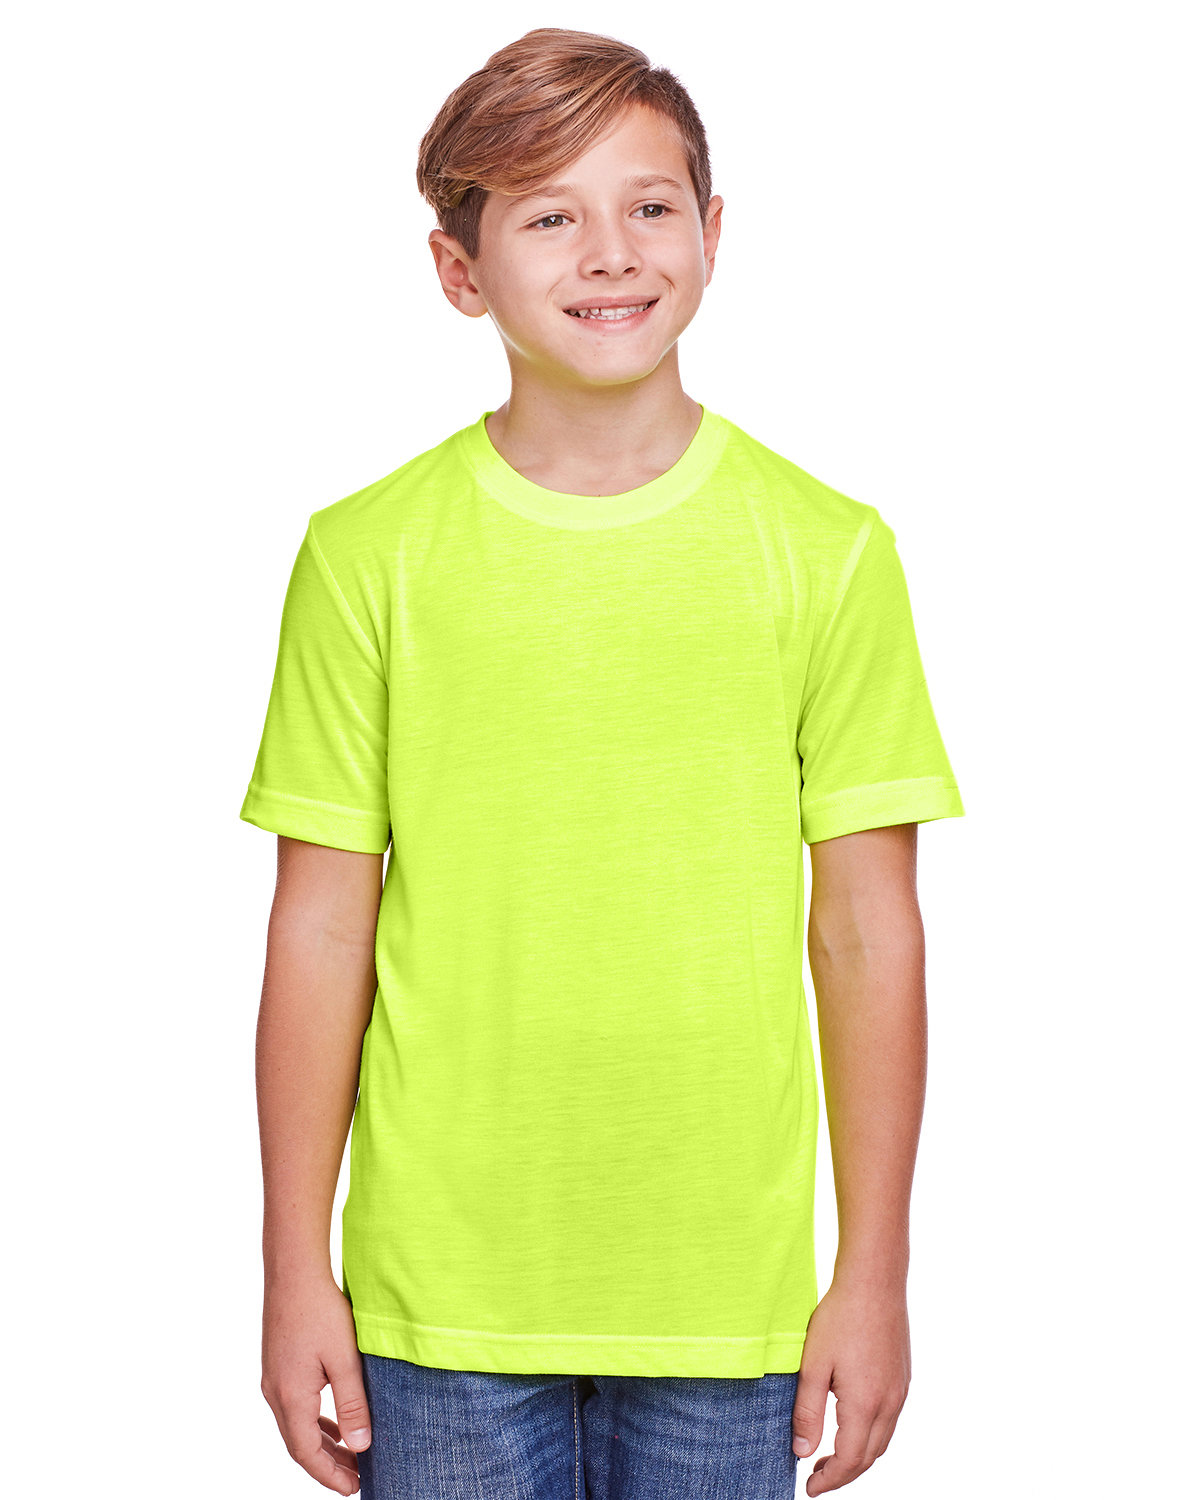 Core 365 Youth Fusion ChromaSoft Performance T-Shirt SAFETY YELLOW 